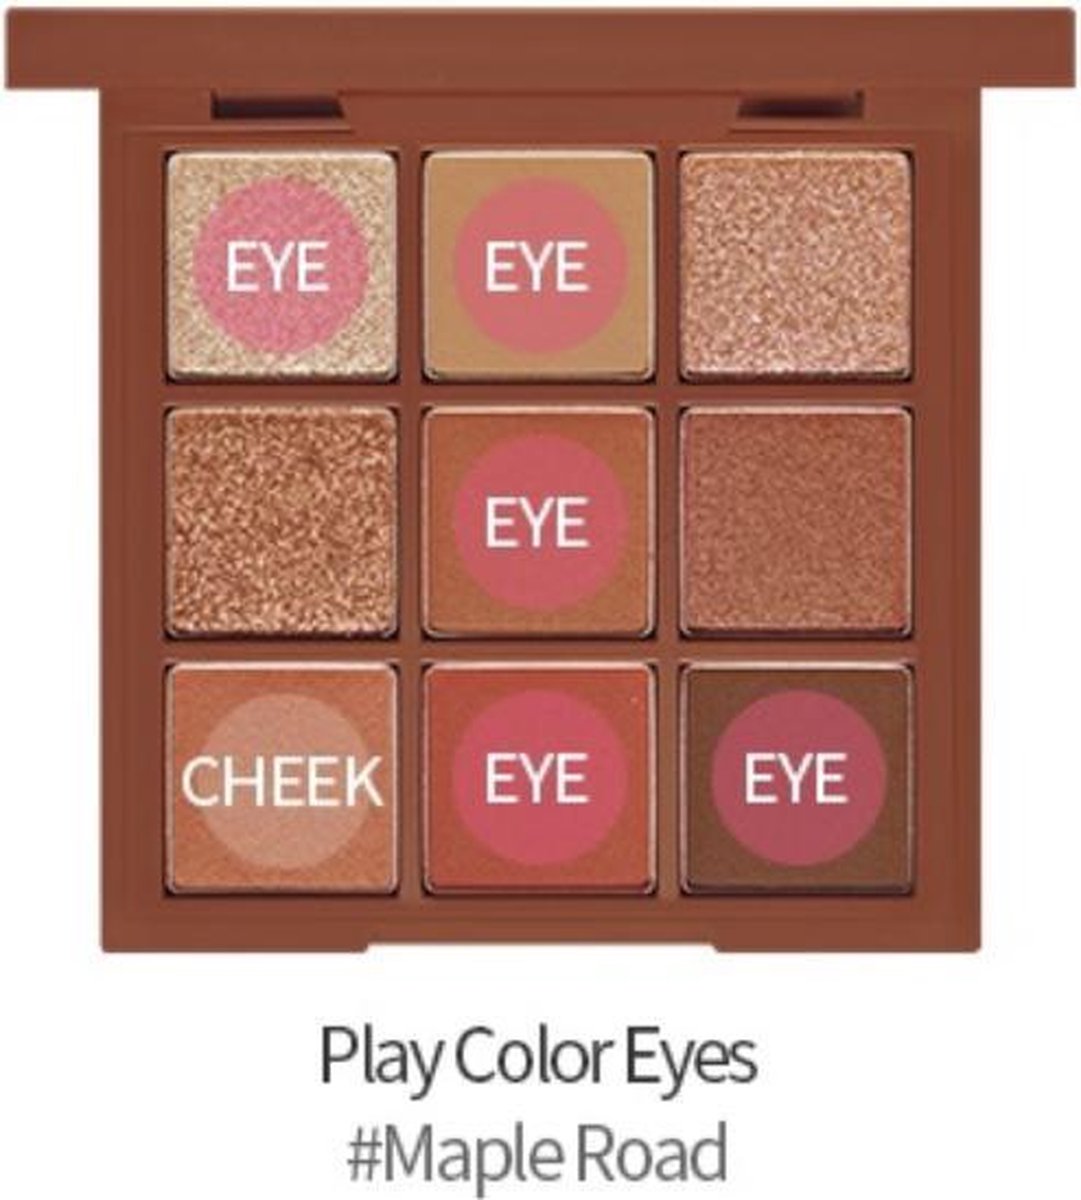 Etude House Eyeshadow Palette #Maple Road - Play Color Eyes - 9 Kleurenpalet - Romantic Sunset Glows - Warme Kleuren - Reddish Bronzing Browns